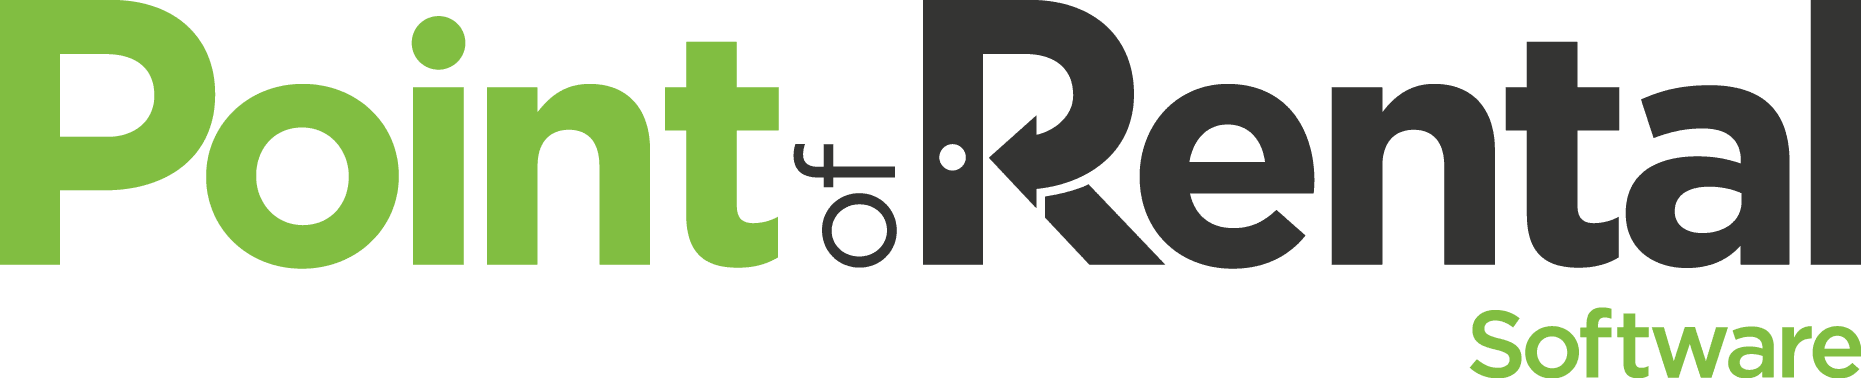 Point of Rental Software logo